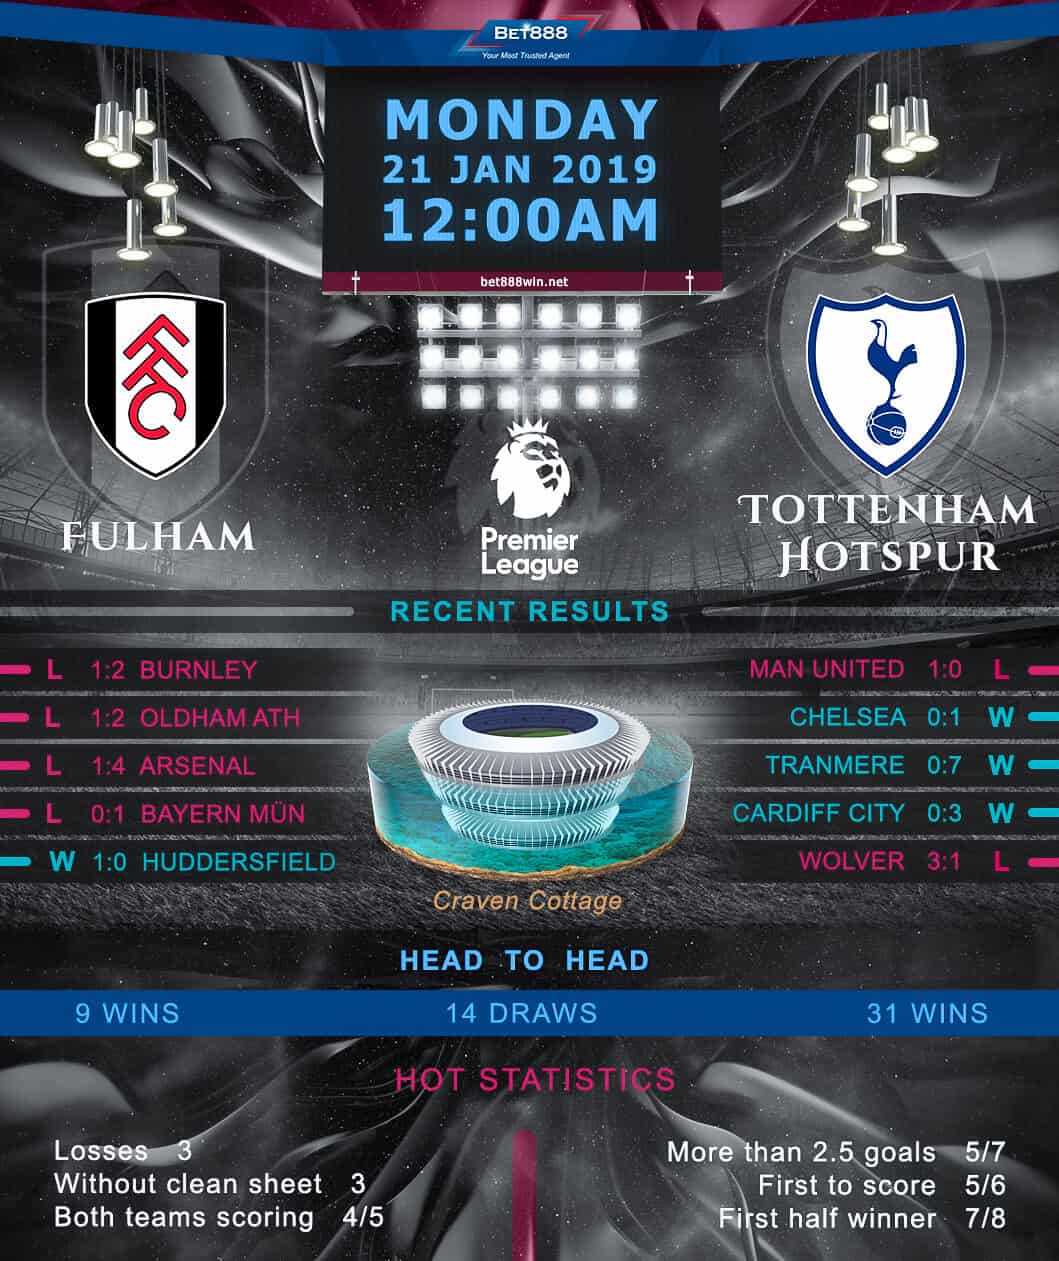 Fulham vs Tottenham Hotspur 21/01/19